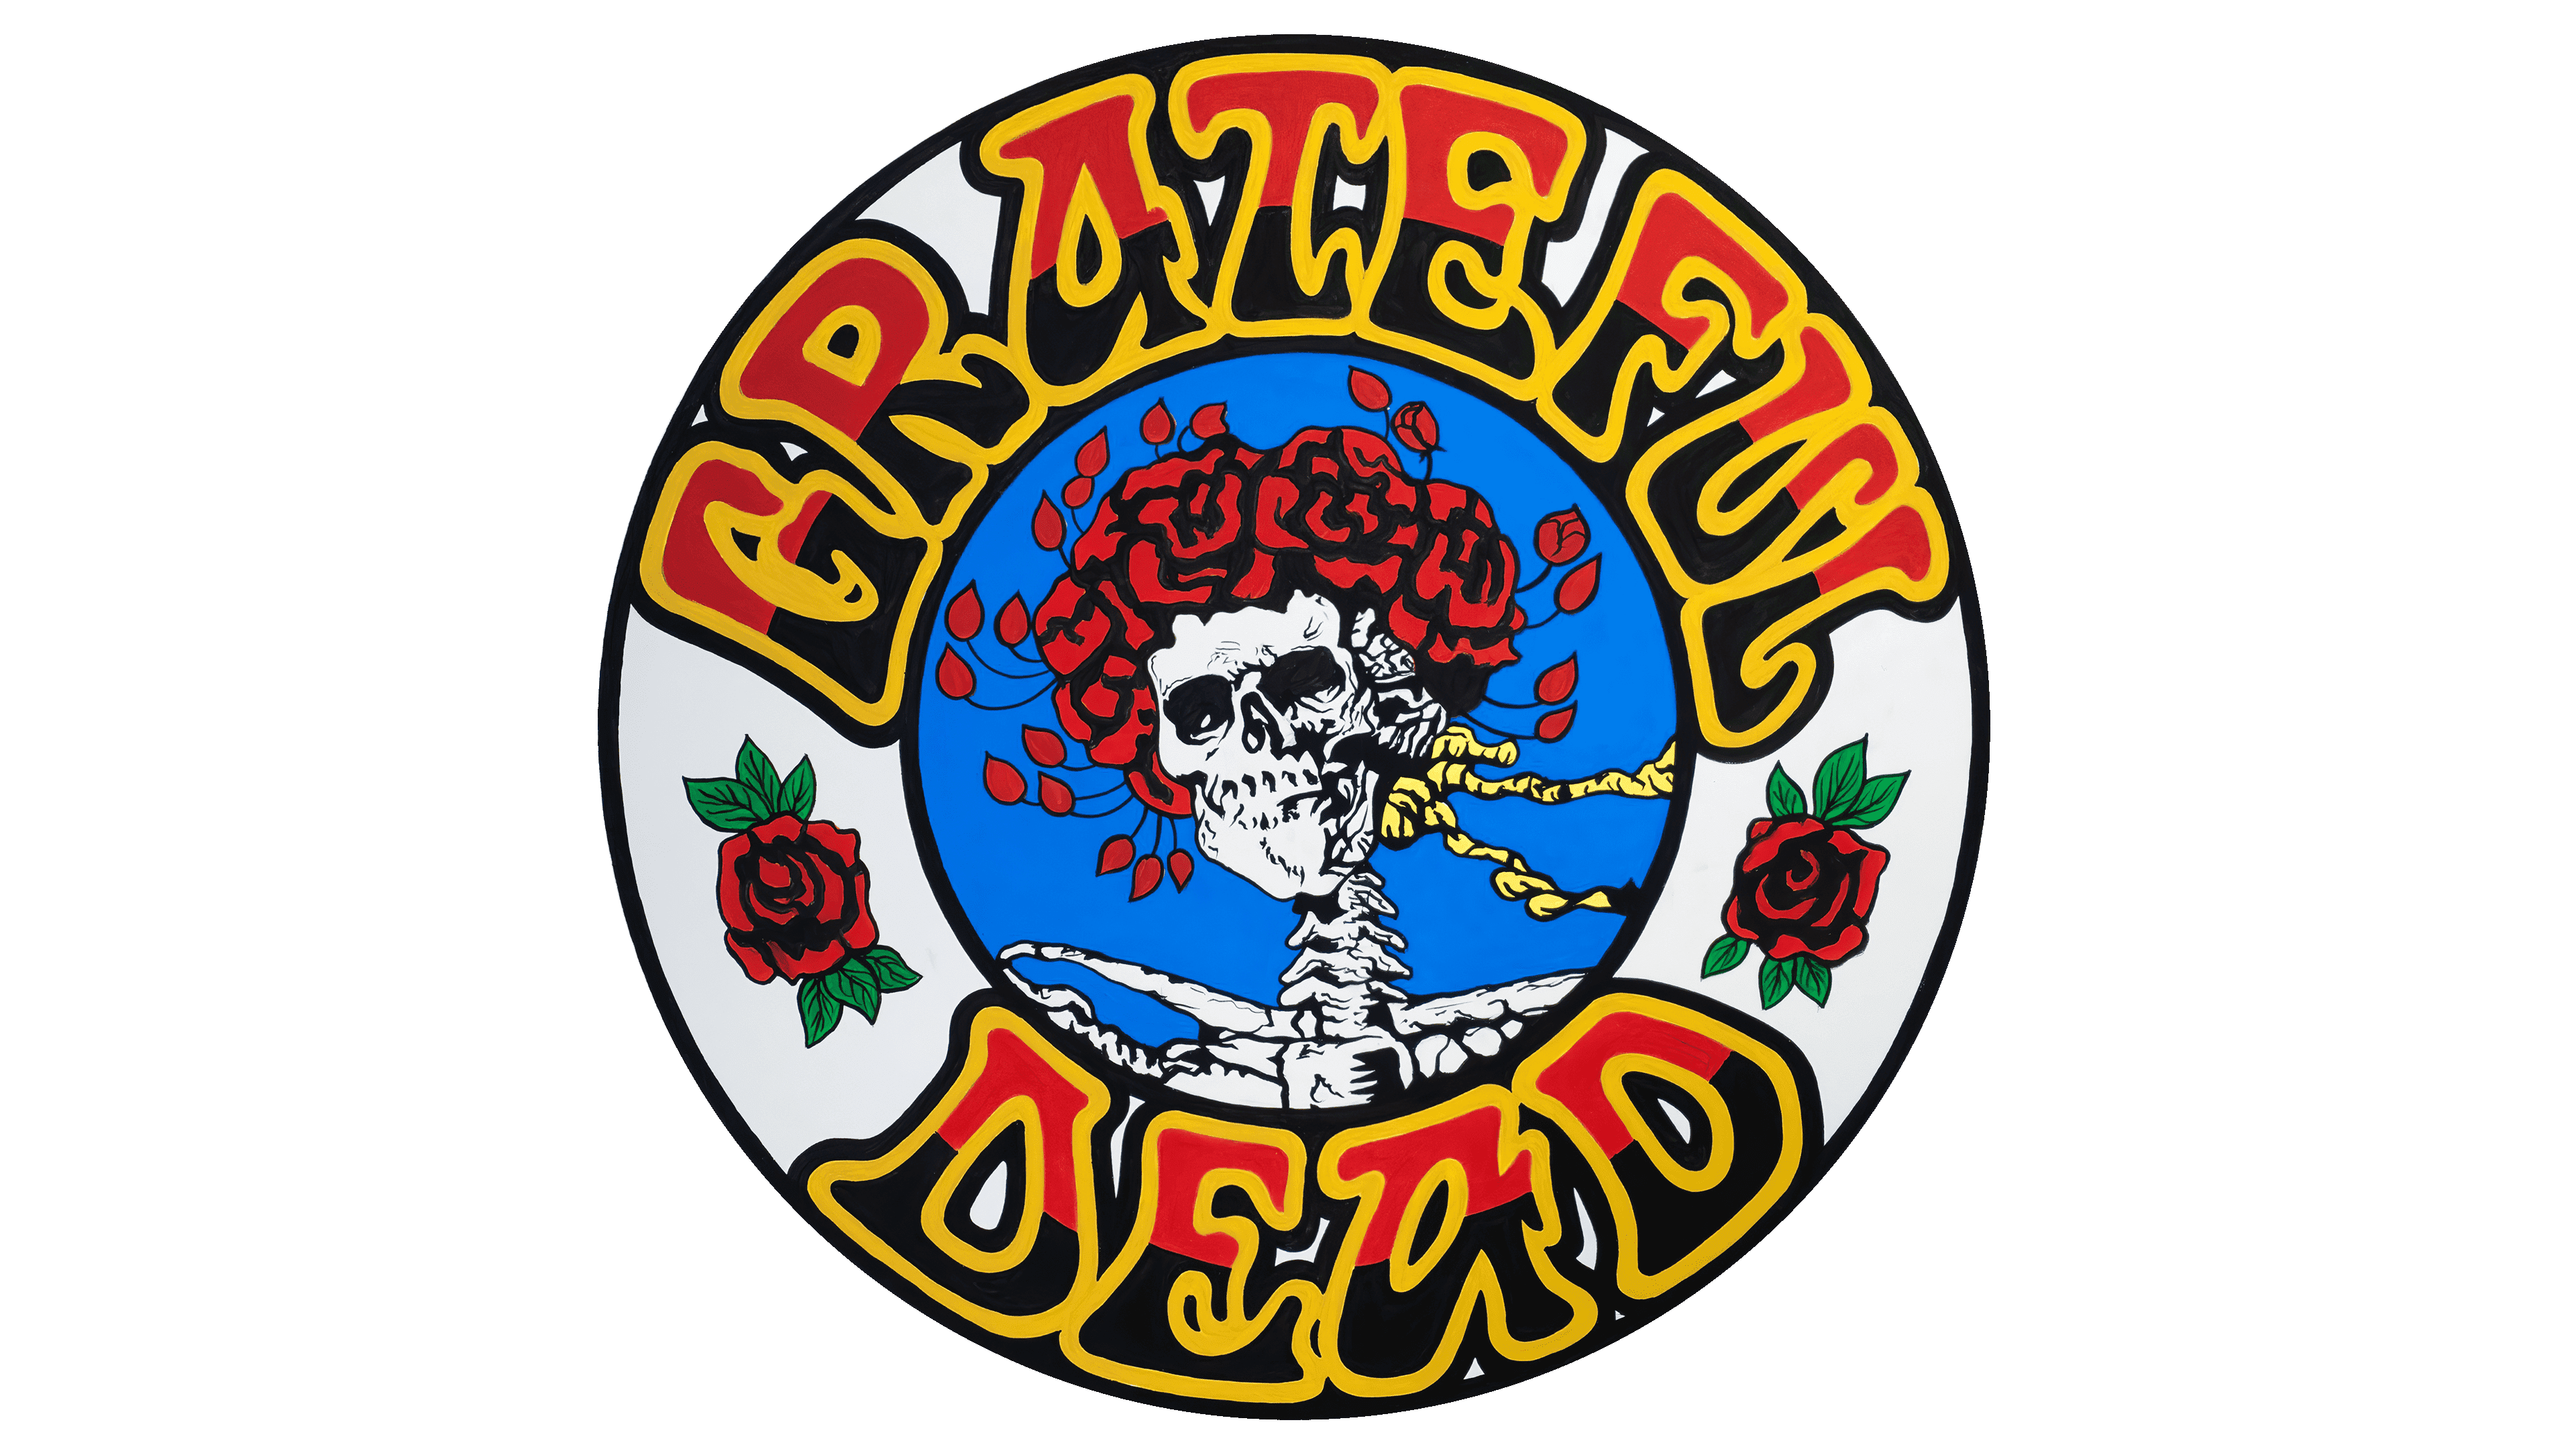 Grateful Dead - 50th Anniversary Logo Word Patch